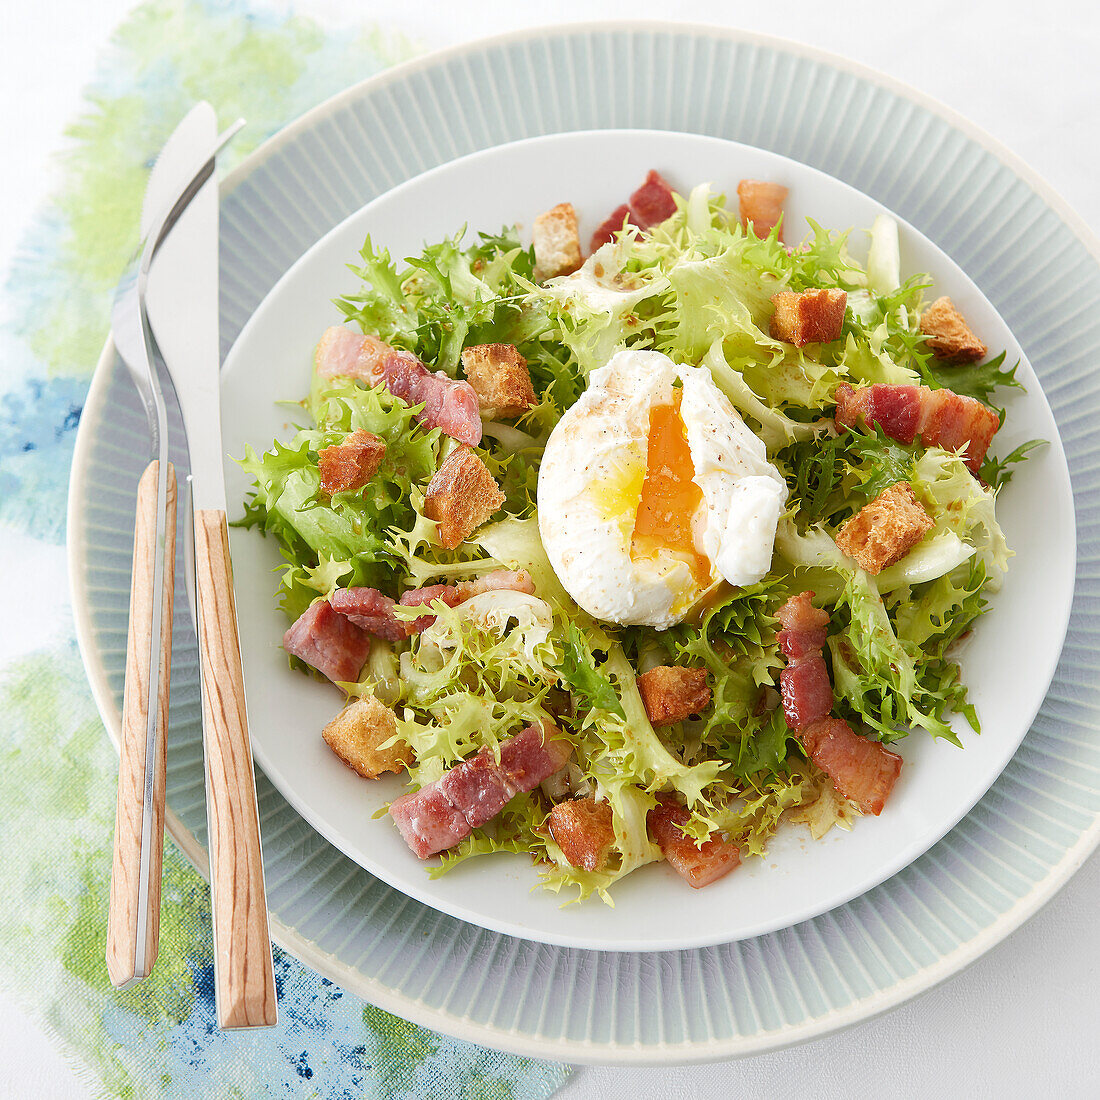 Salade Lyonnaise with a poached egg